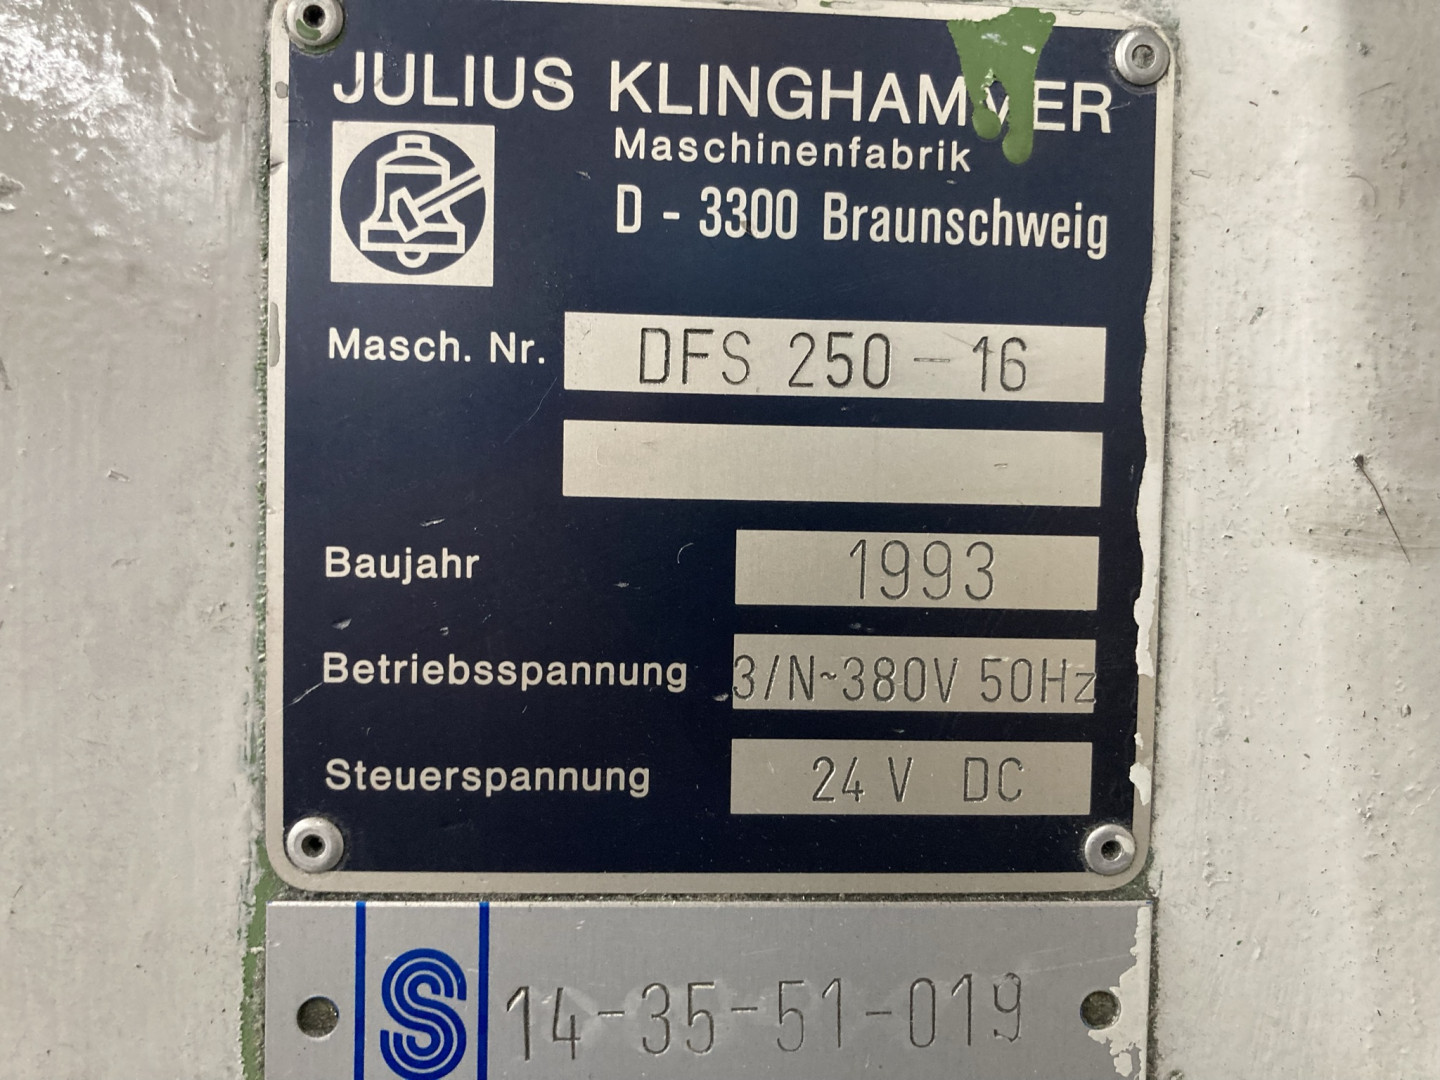 Klinghammer DFS 250 pestañadora - curlingadora - cerradora